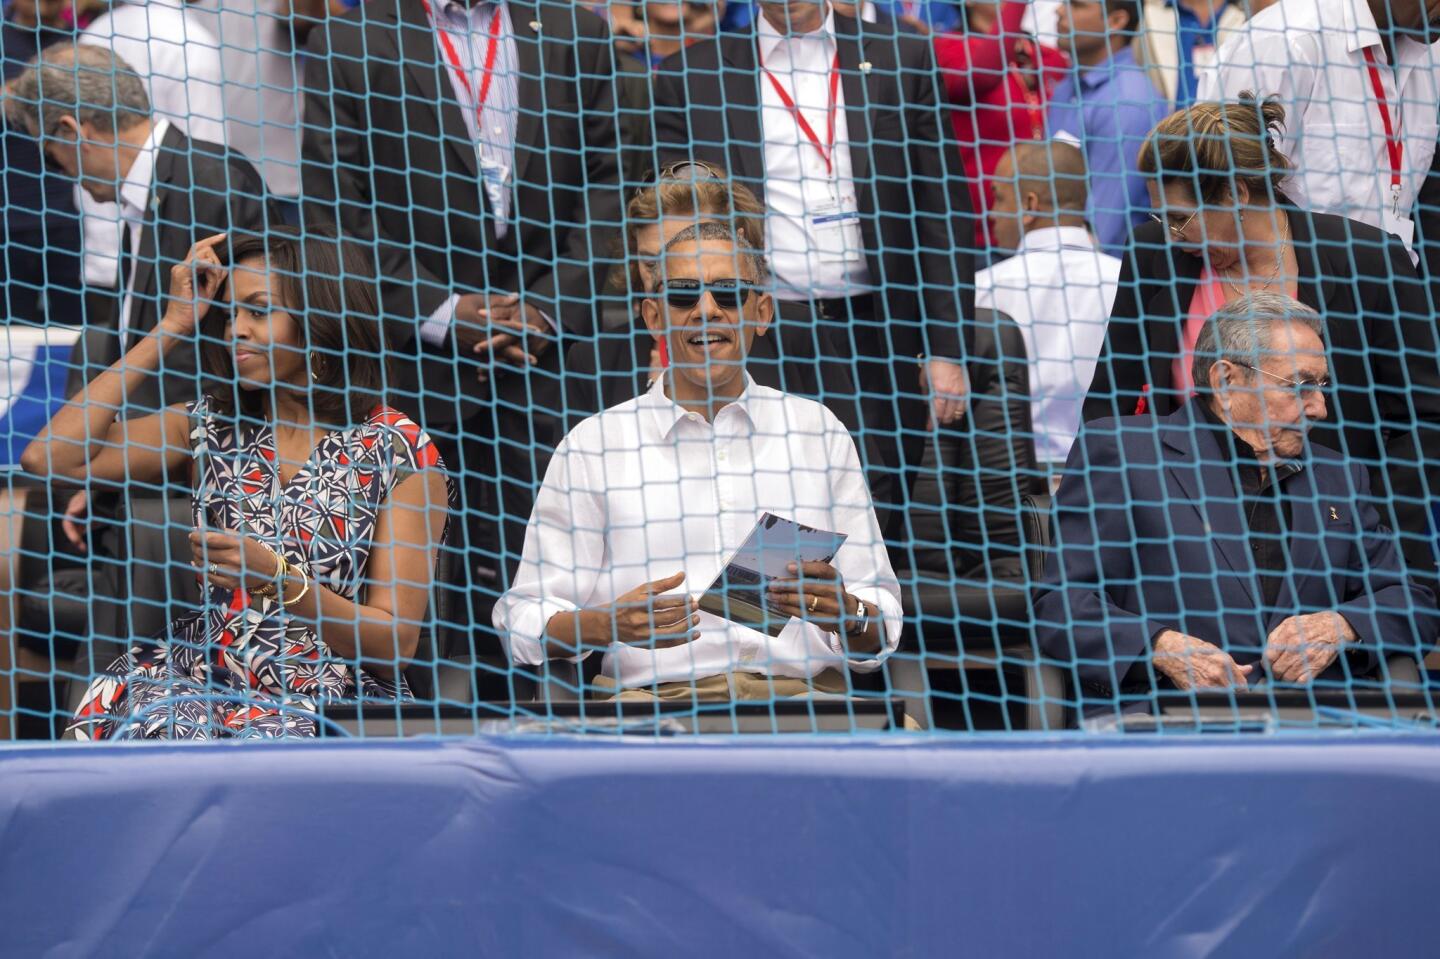 Obama at baseball game in Cuba